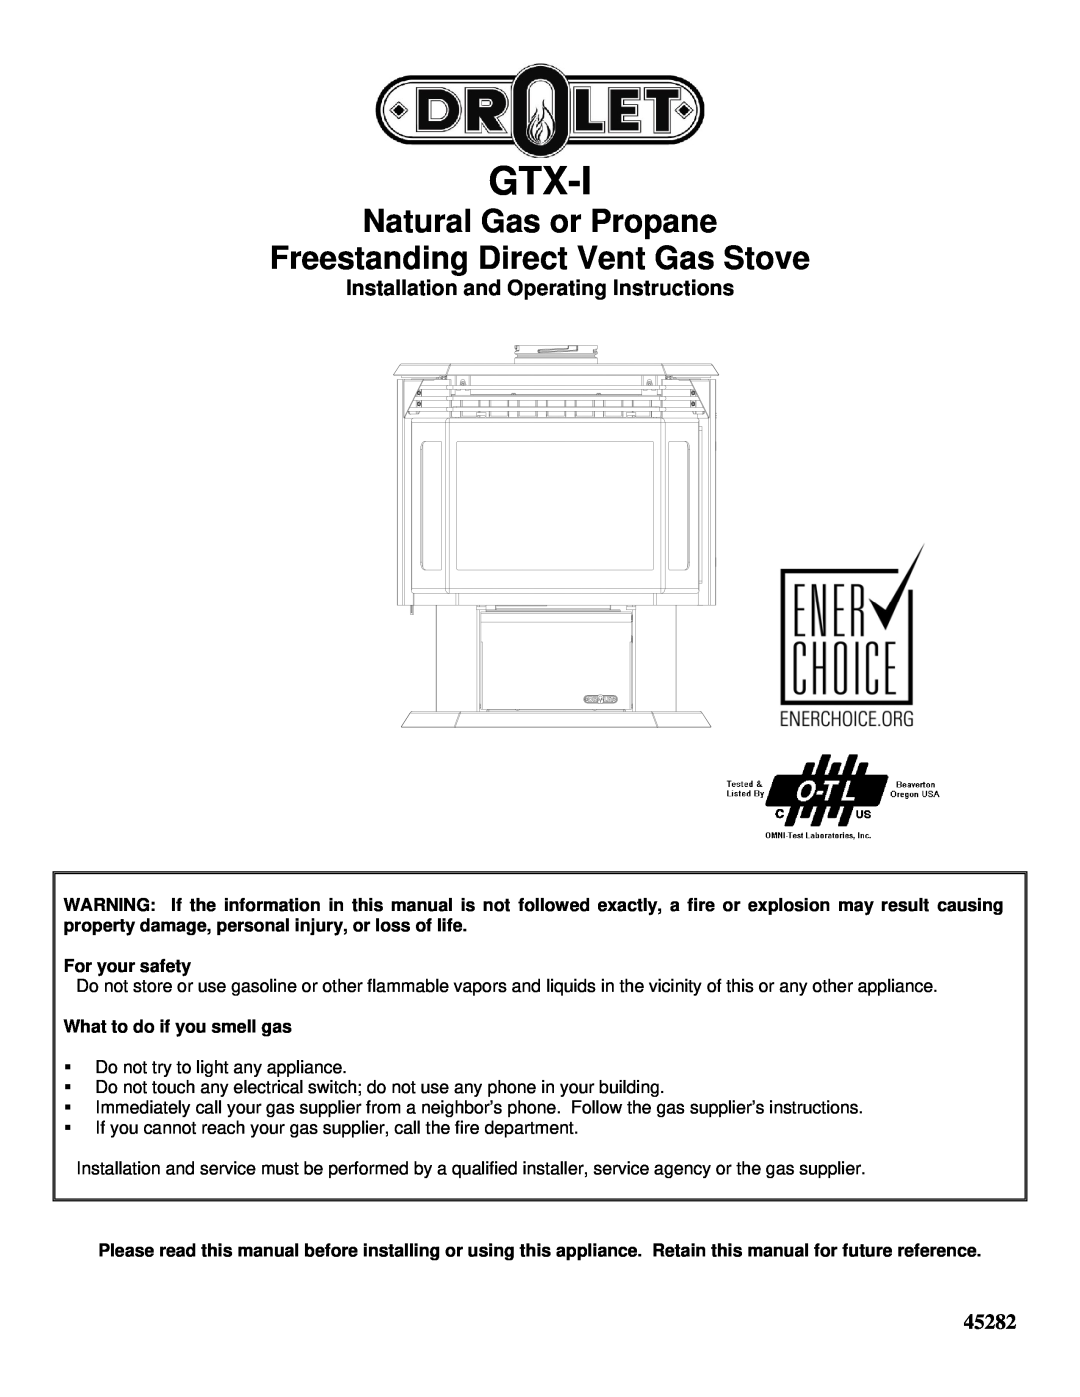 Drolet GTX-I manual Installation and Operating Instructions, 45282, Gtx-I 